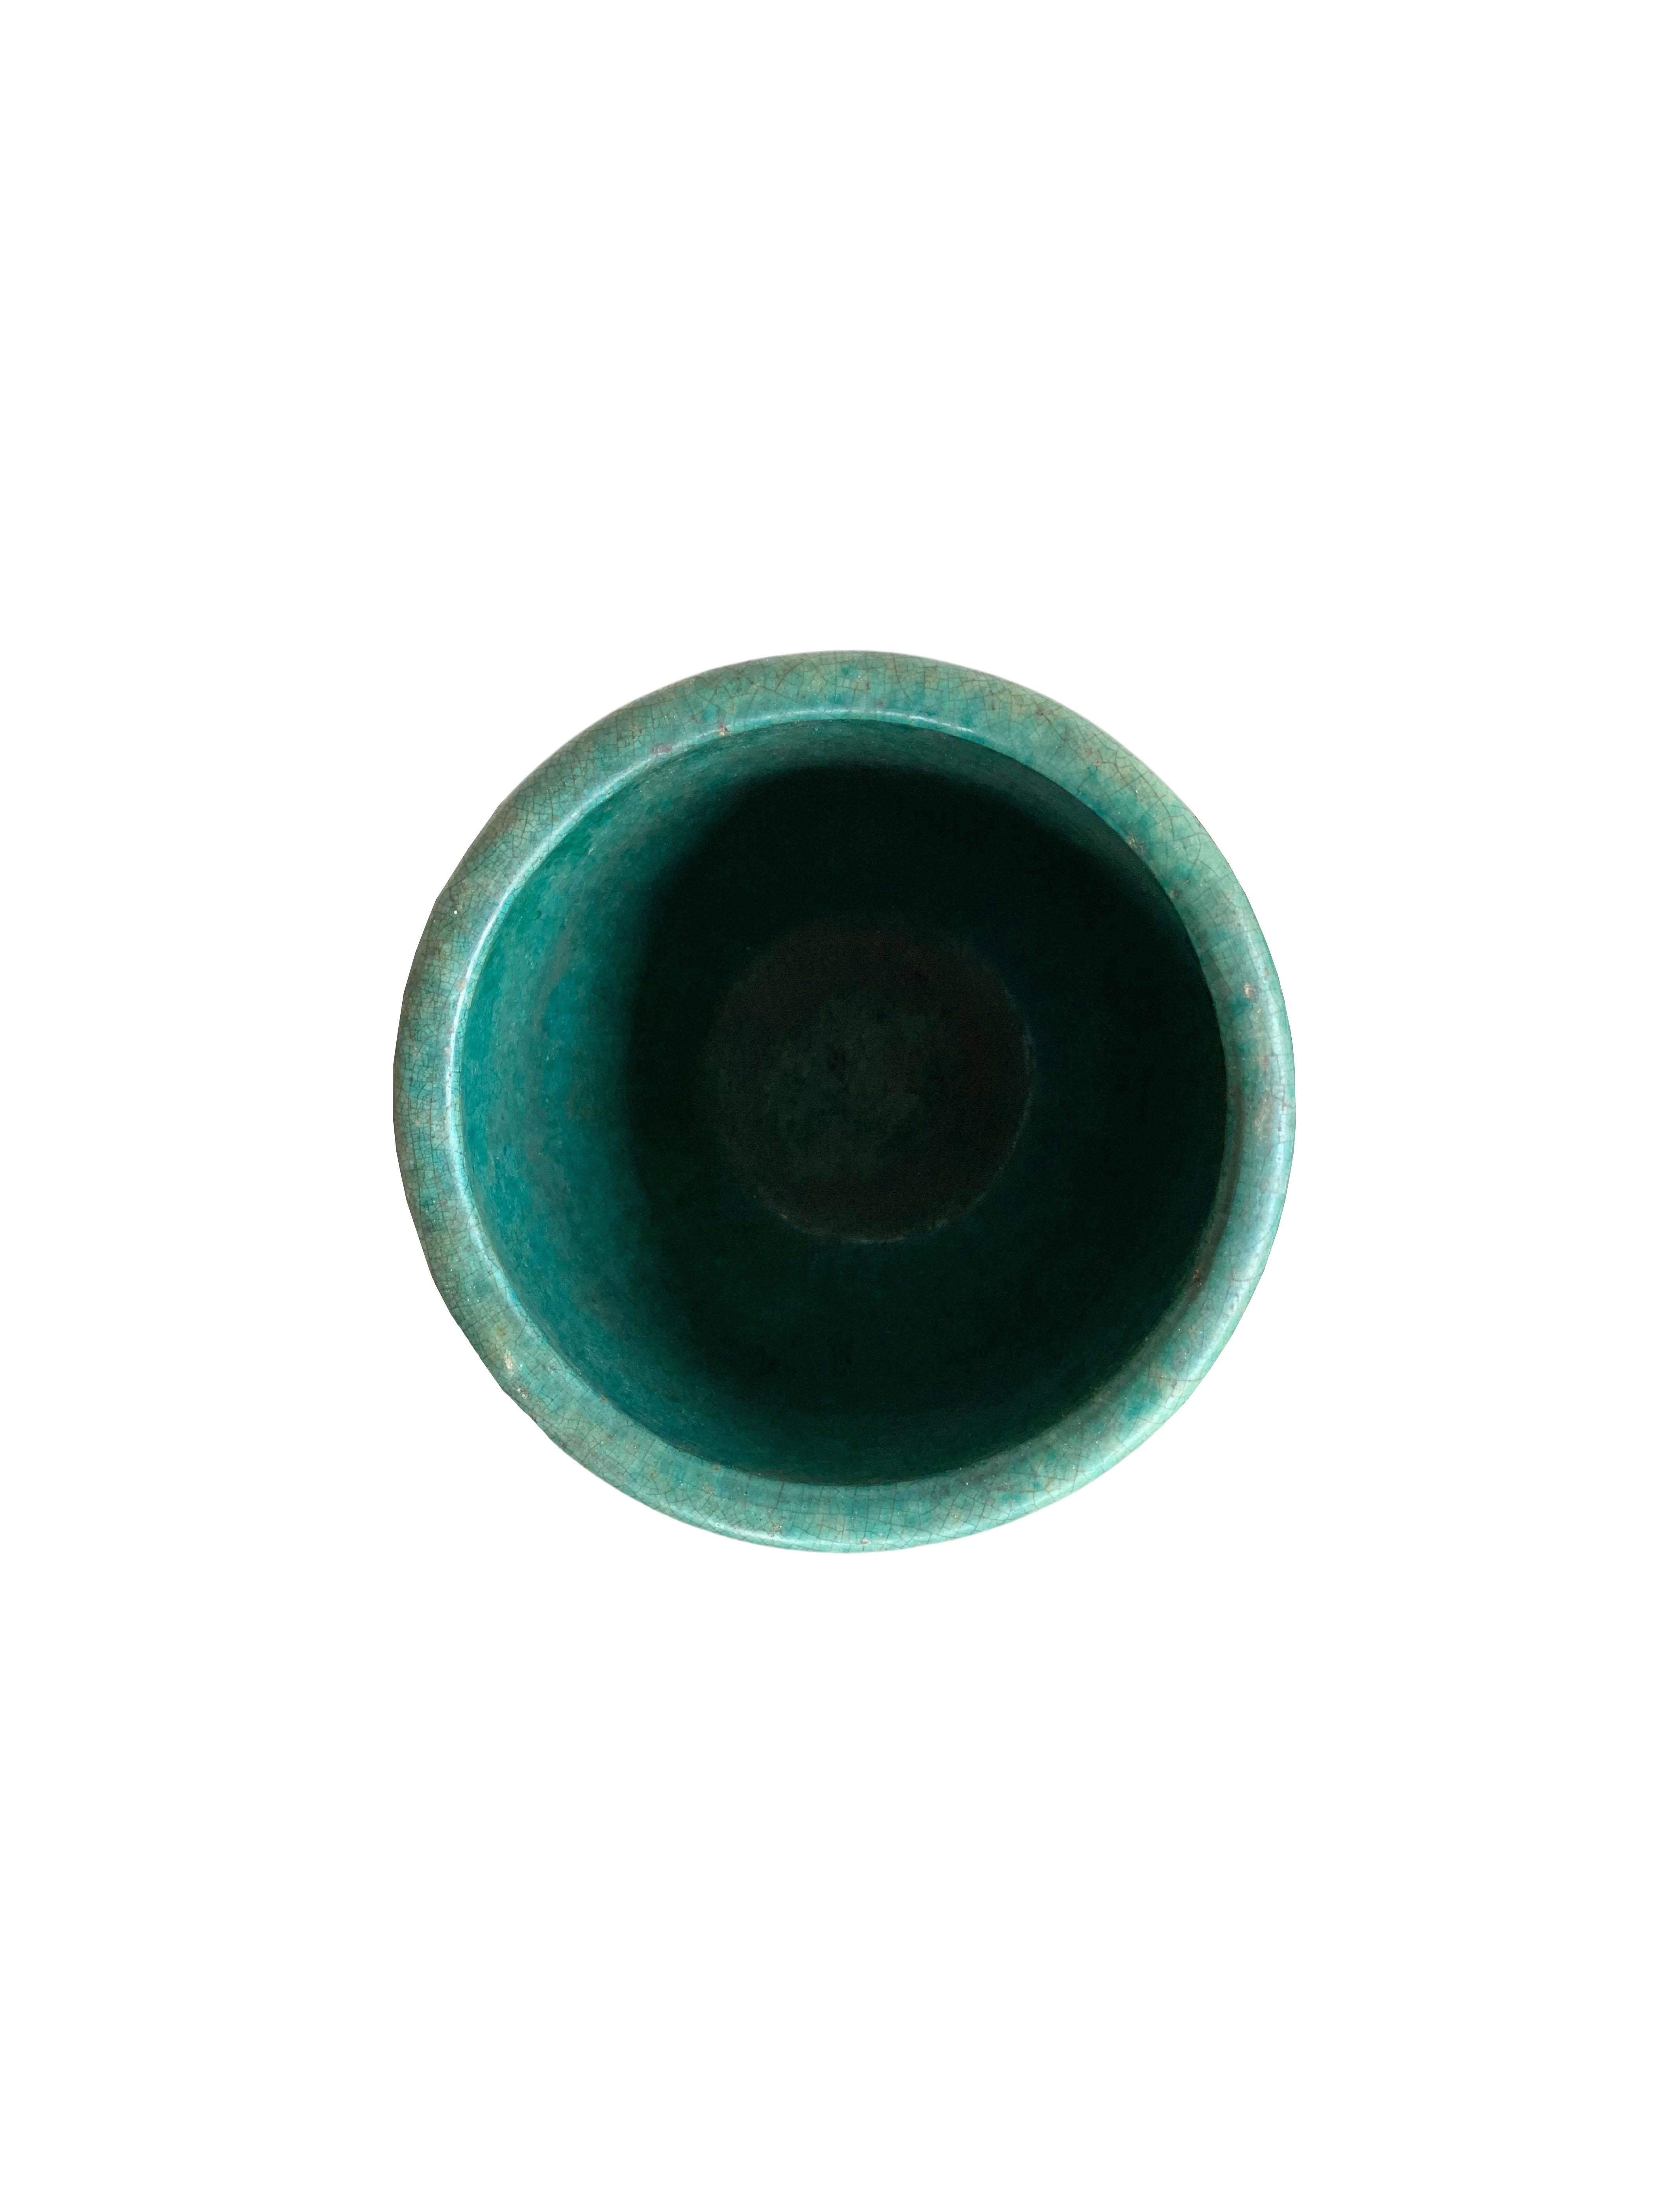 Ceramic Chinese Green Glazed Jar / Planter, c. 1900 For Sale